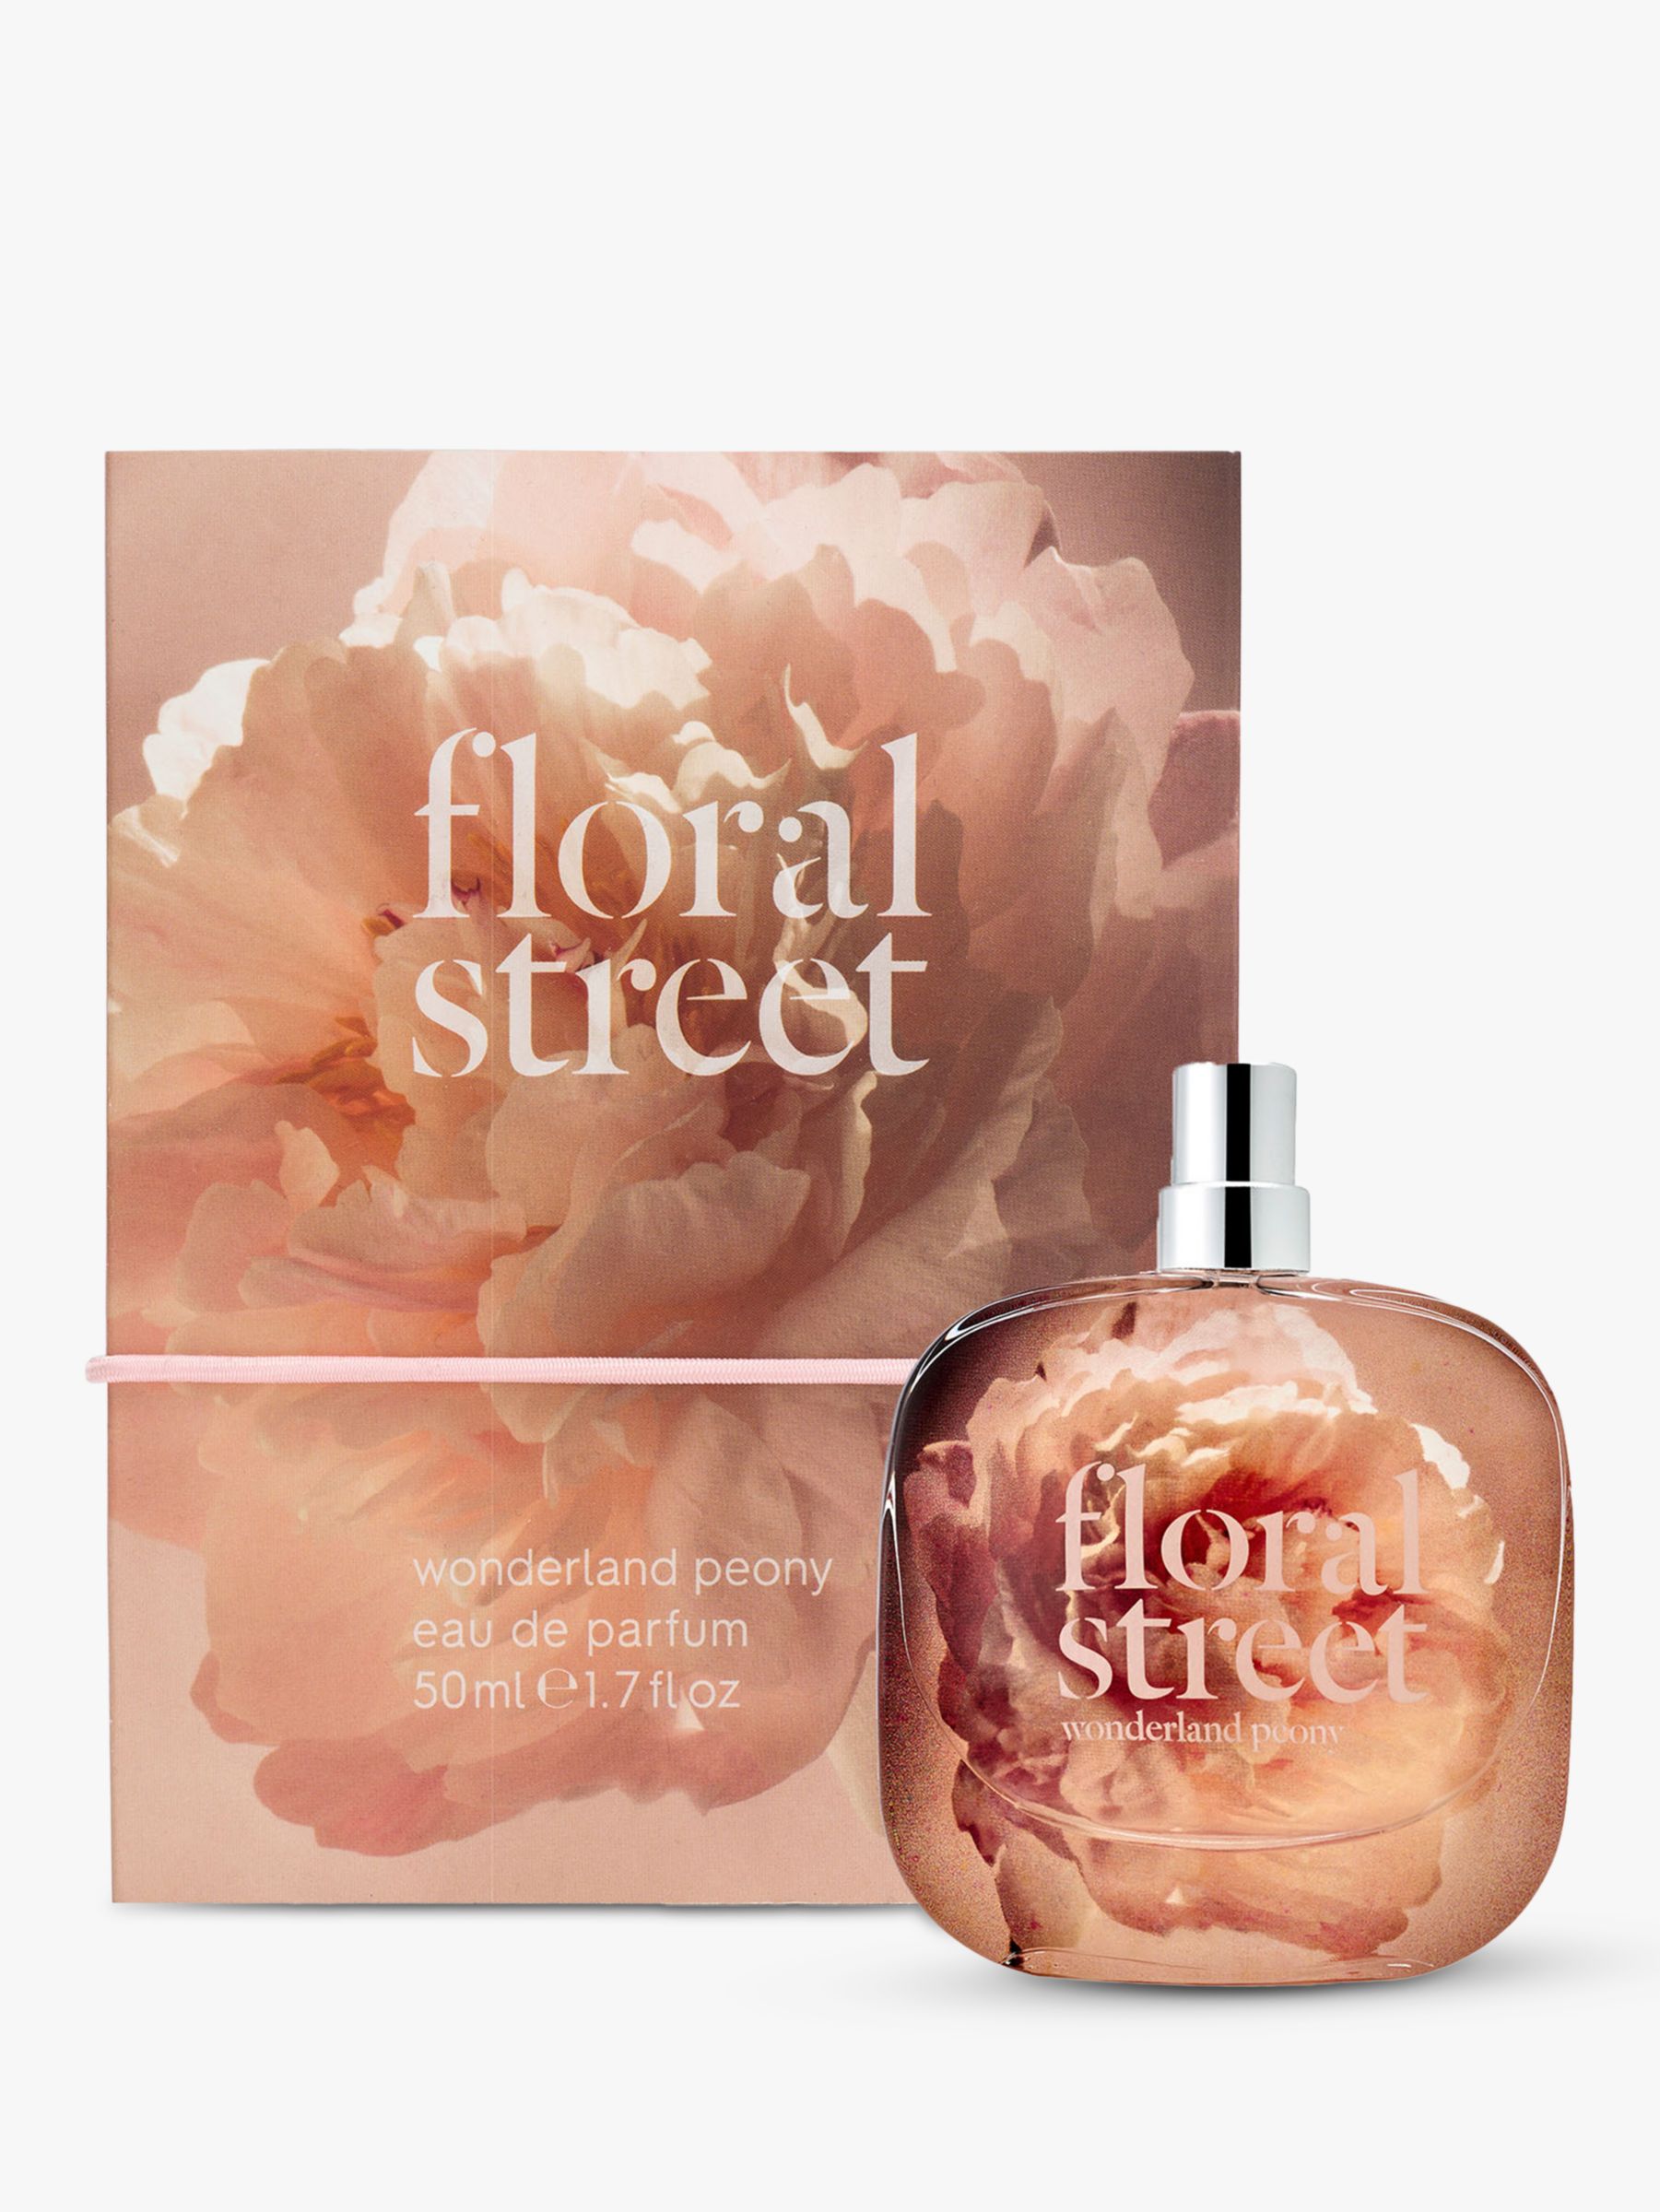 Floral Street Wonderland Peony Eau de Parfum, 50ml 2